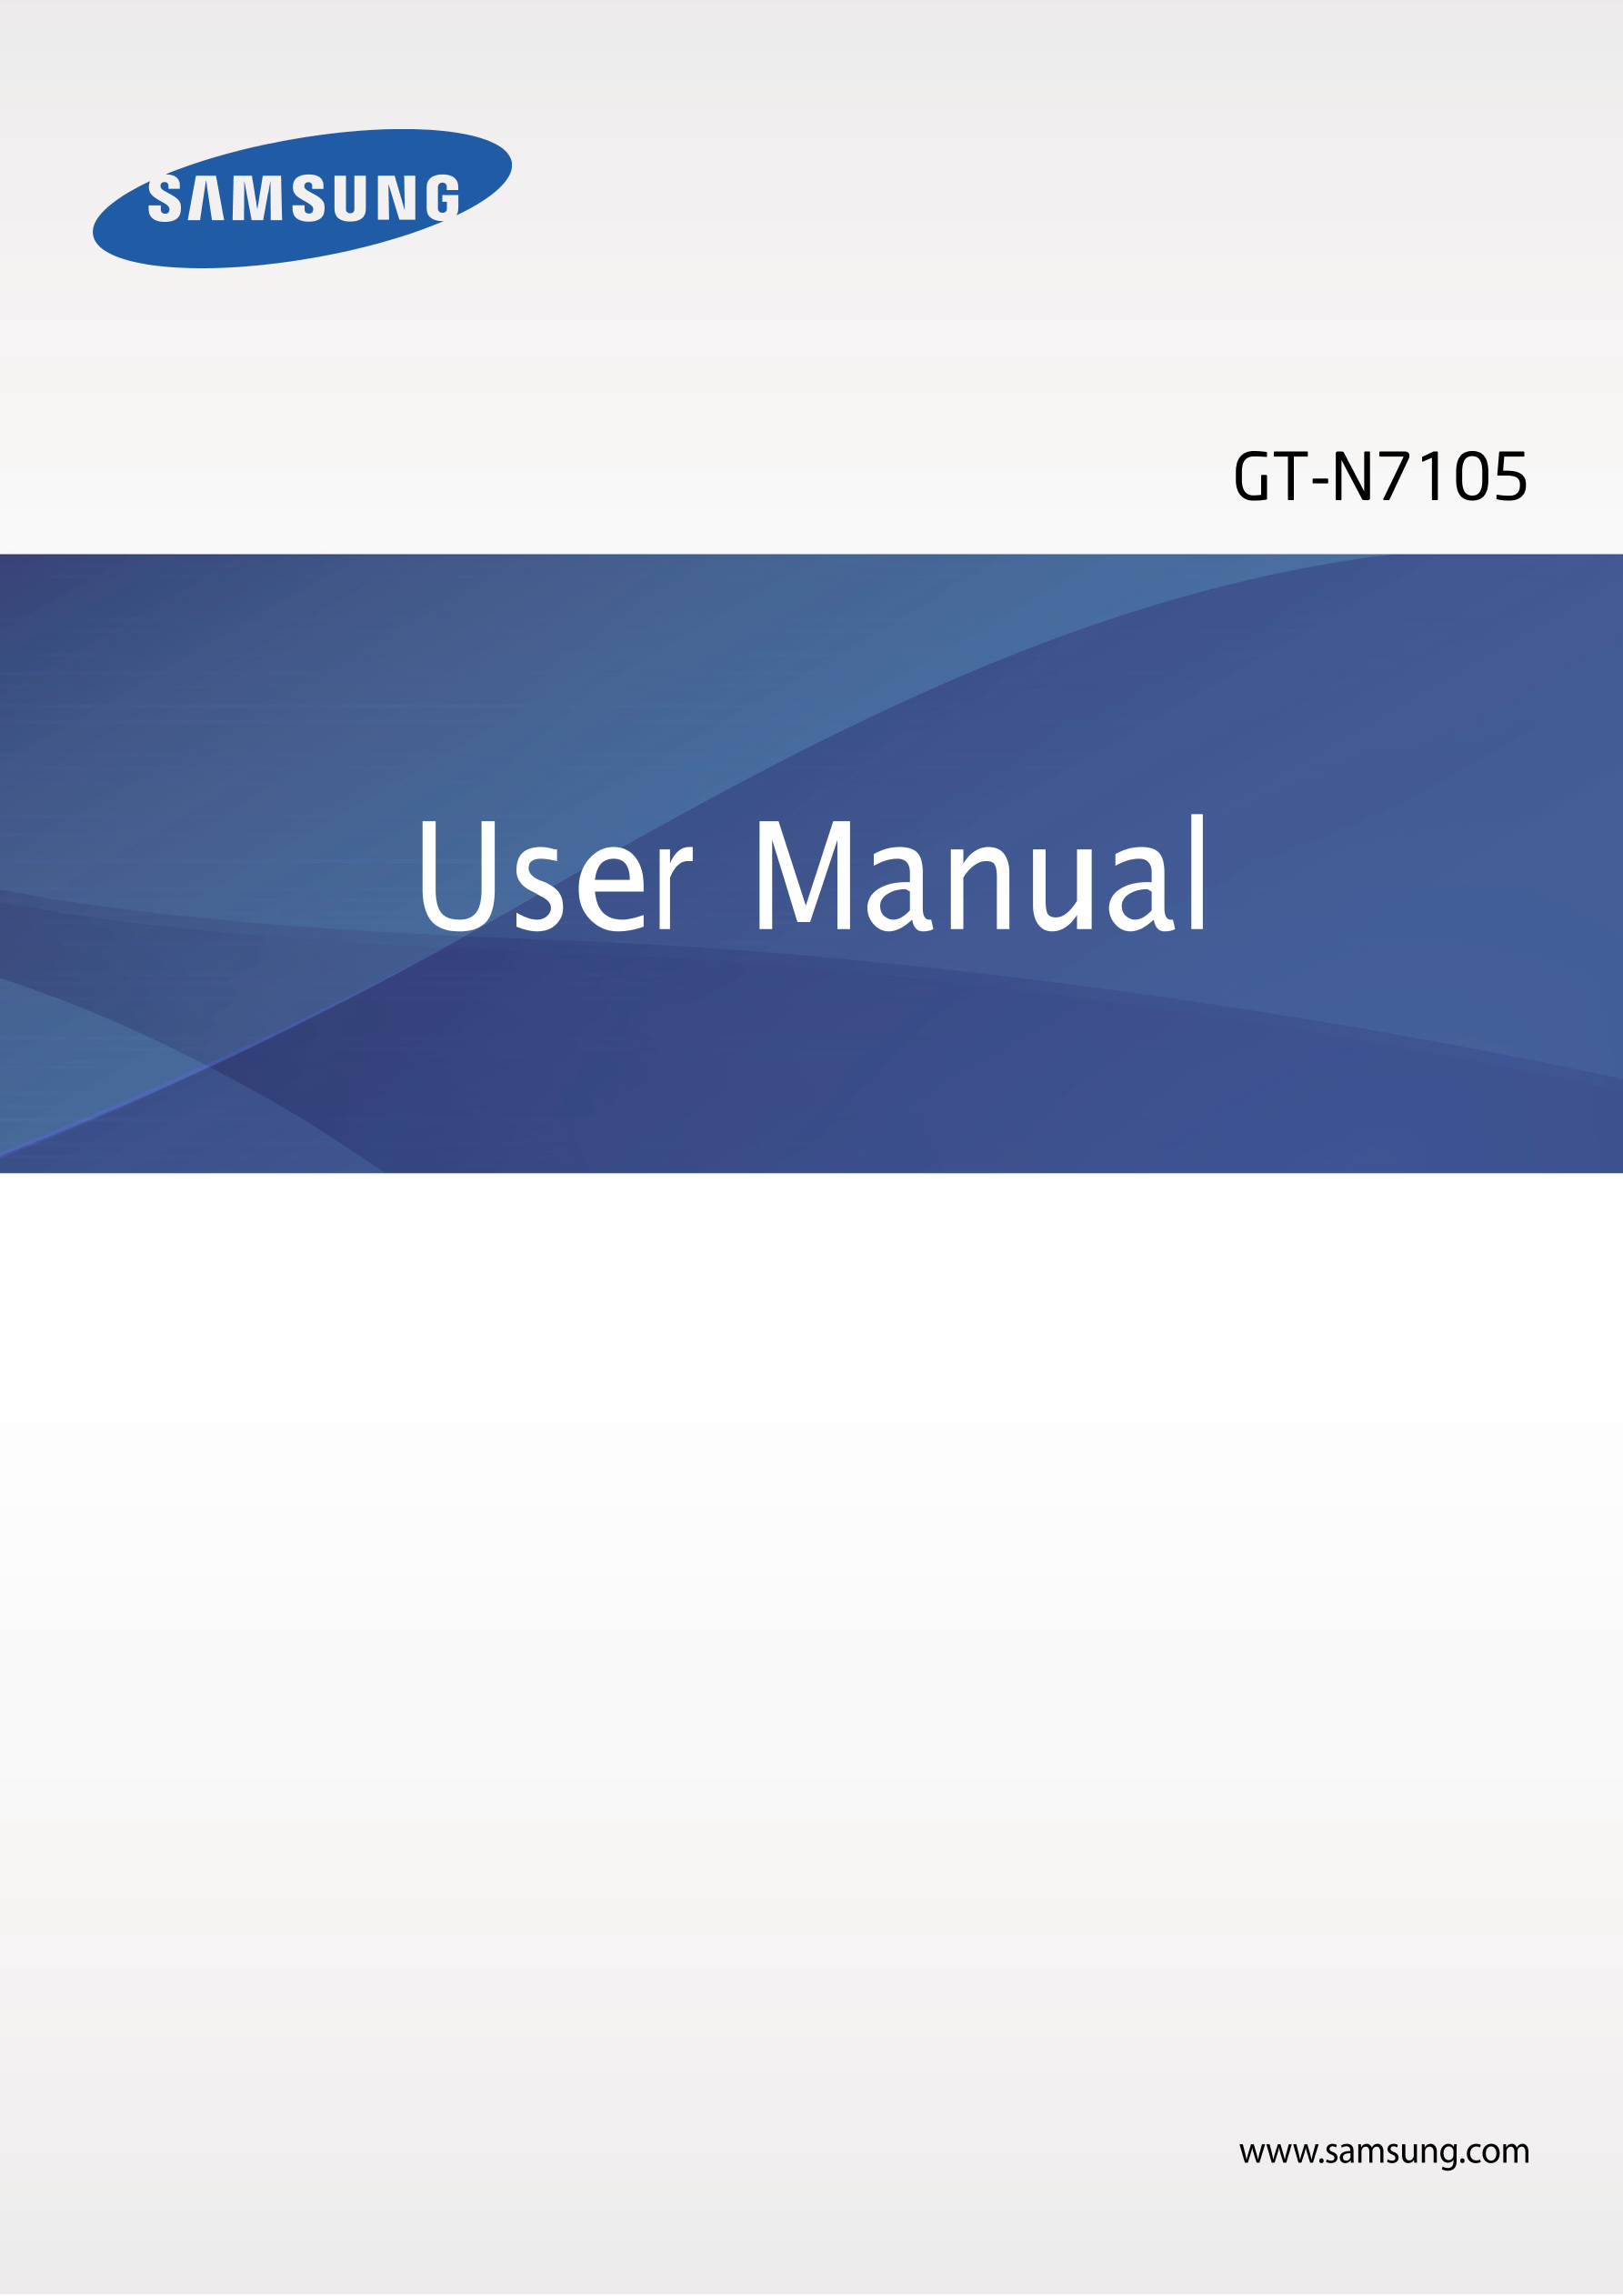 GT-N7105
User Manual
www.samsung.com